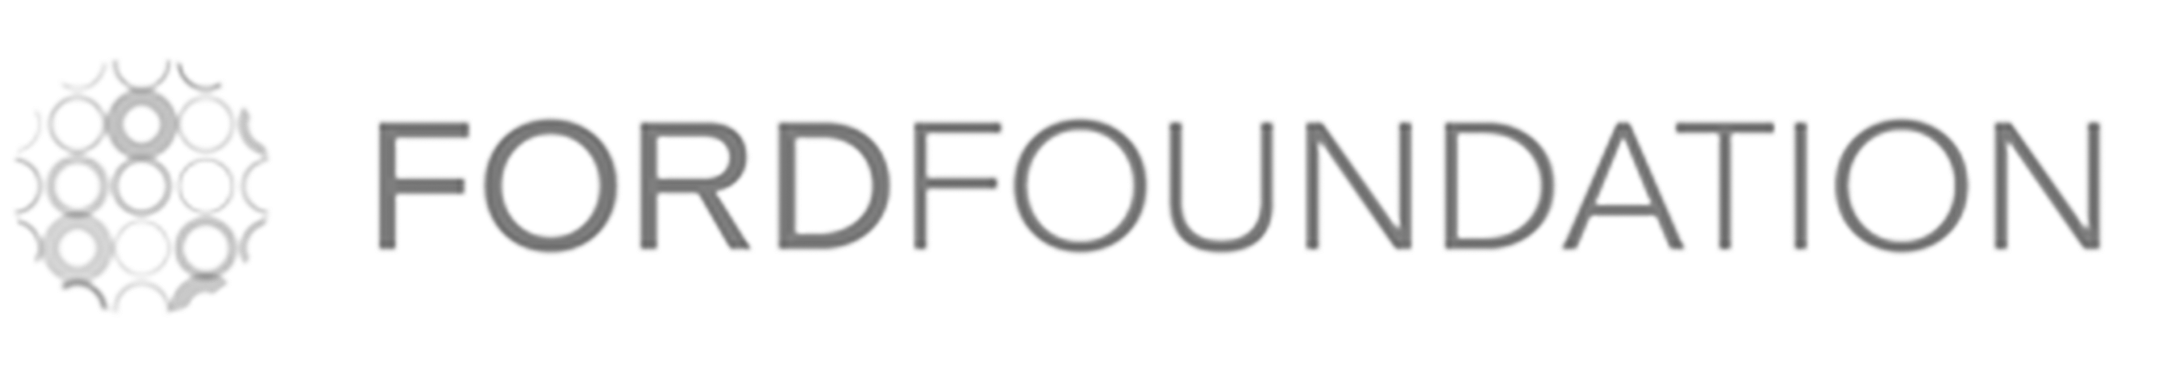 Ford foundation partnerships #2